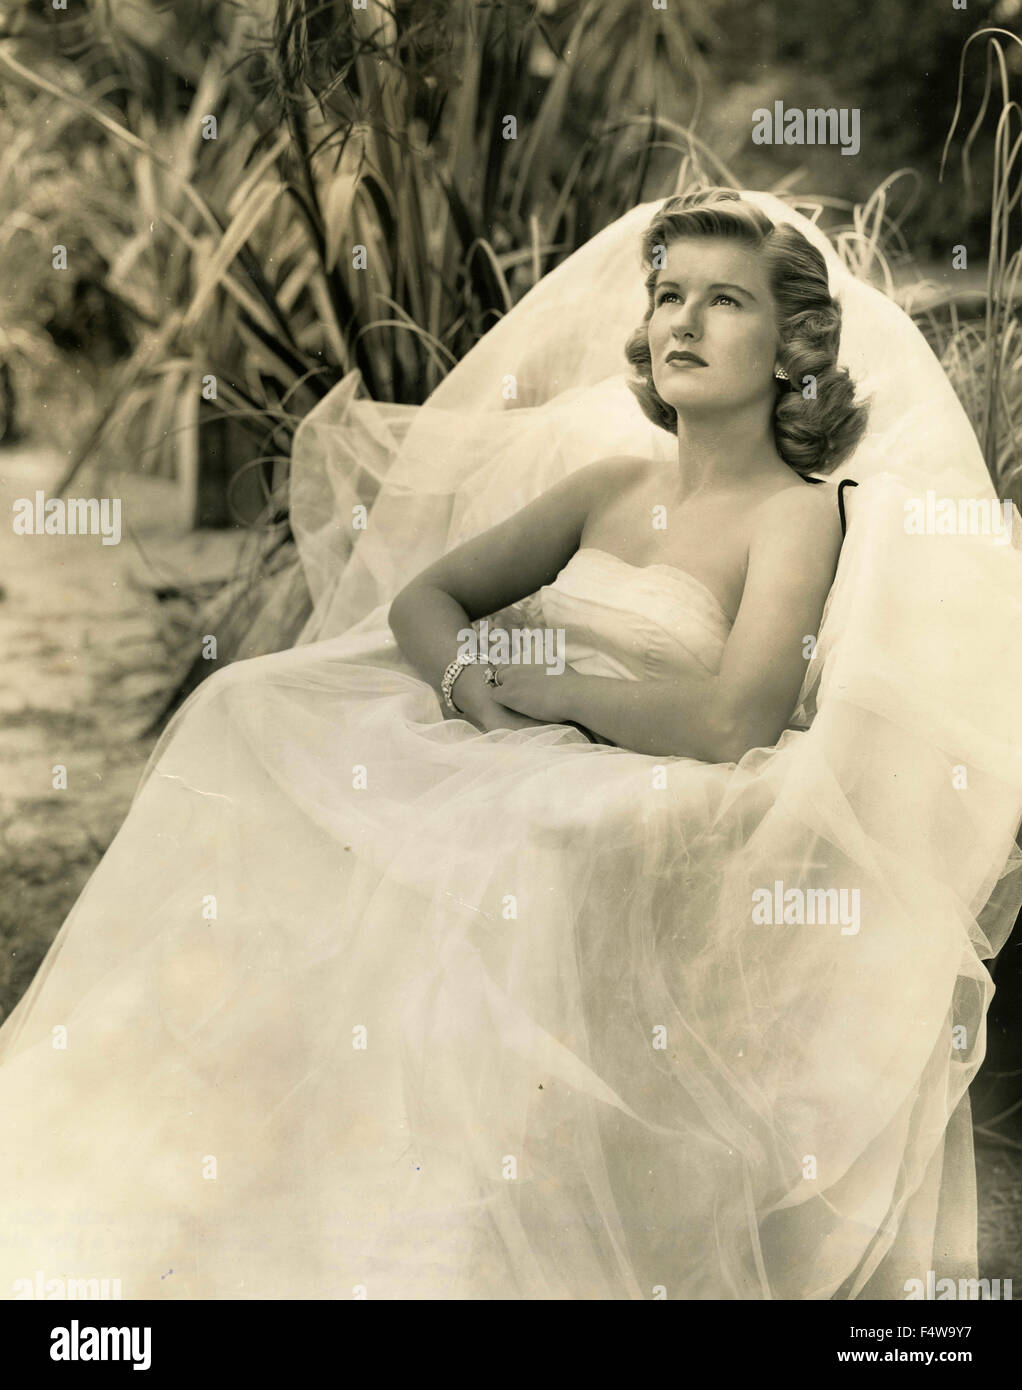 The American actress Barbara Bel Geddes wears a white wedding dress Stock Photo